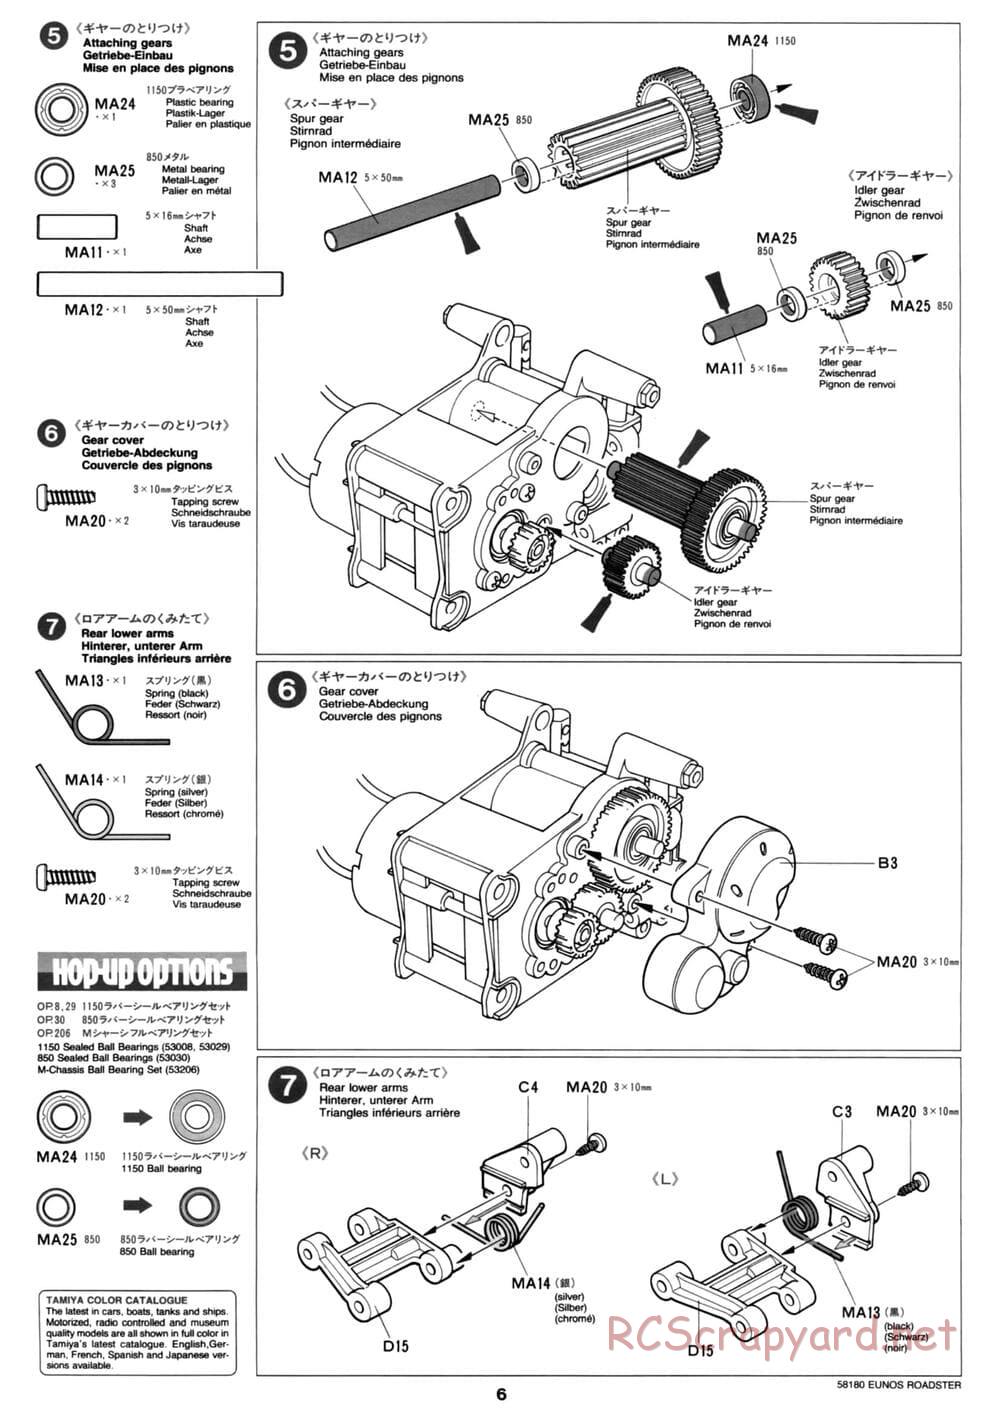 Tamiya - Eunos Roadster - M02M Chassis - Manual - Page 6